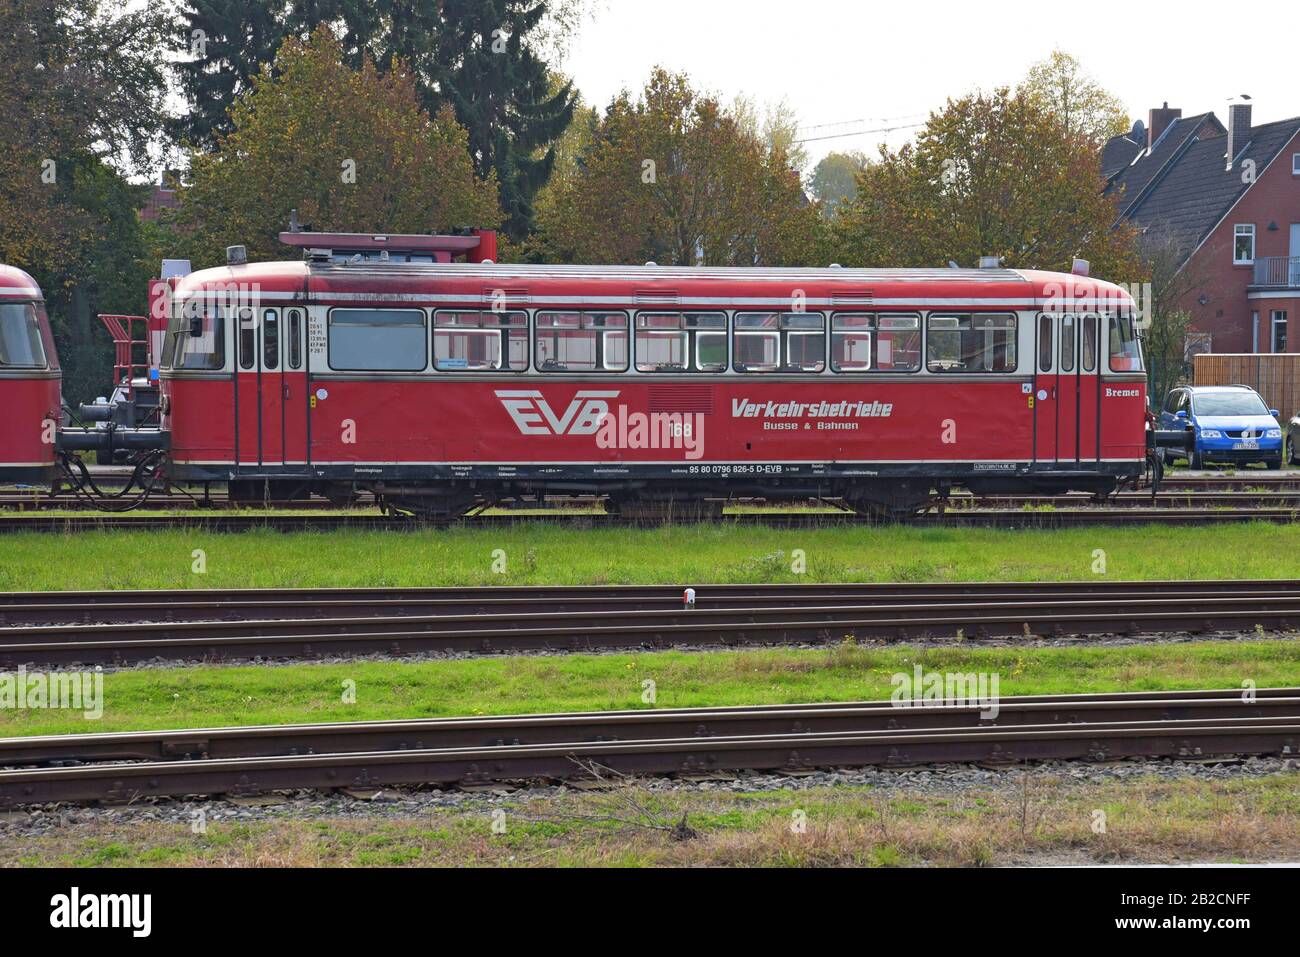 A vintage Deutsche Bahn railcar in a siding at Bremervorde, Germany. October 2019 Stock Photo